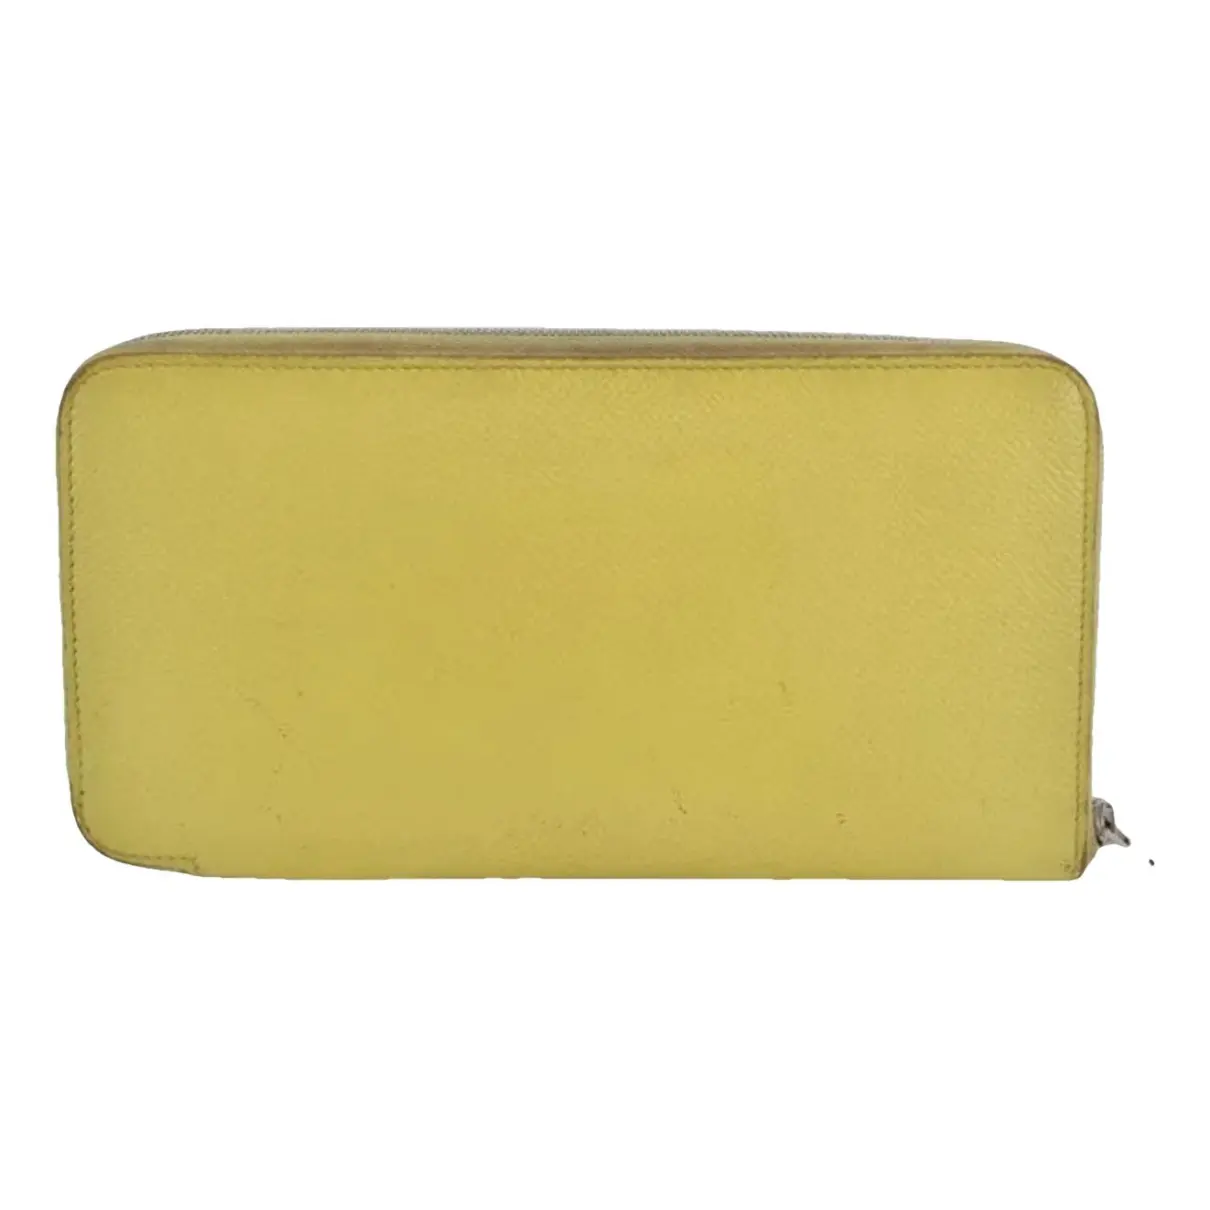 Azap leather wallet